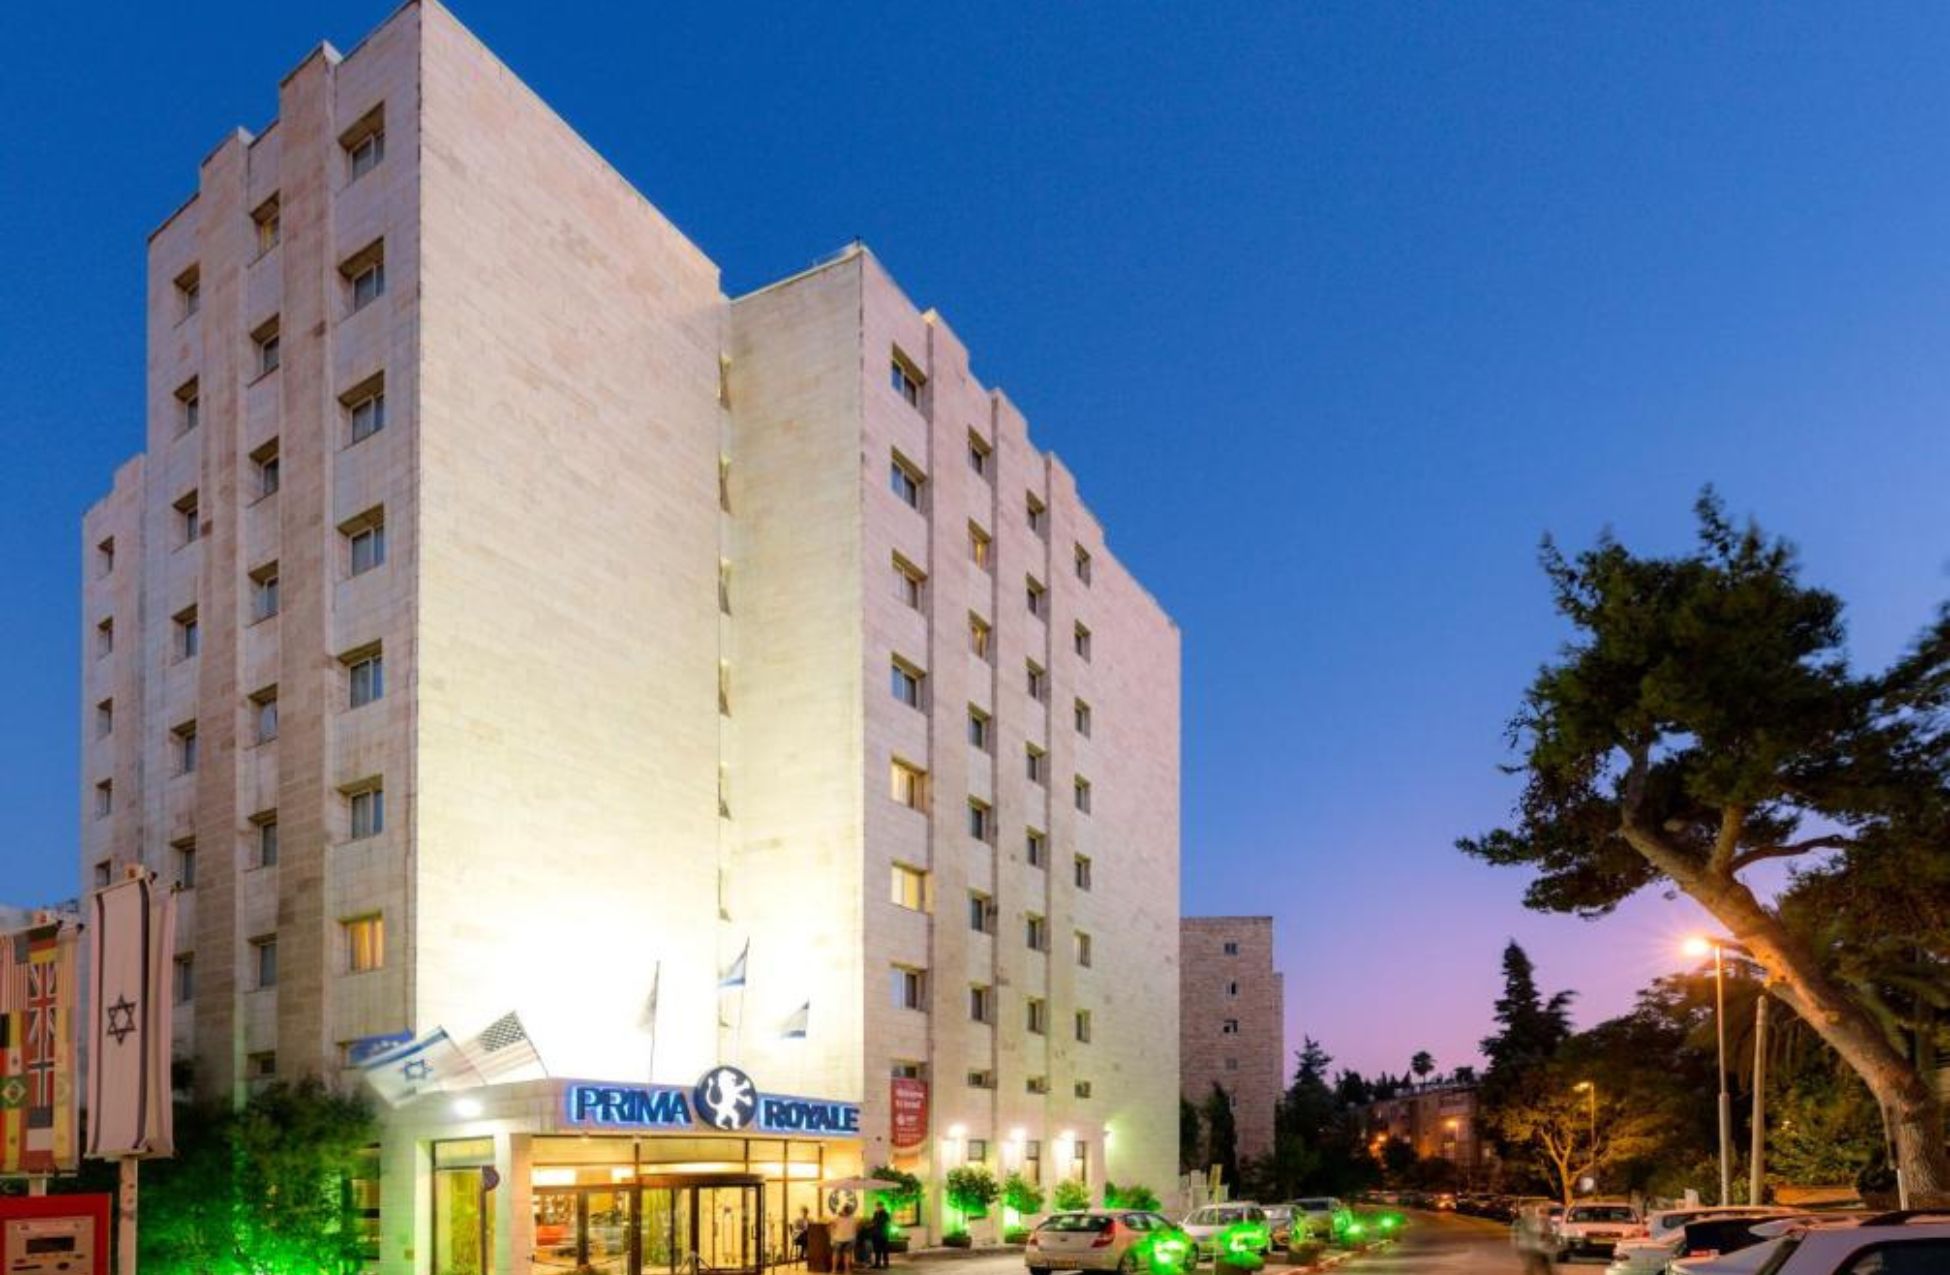 Prima Royale Hotel - Best Hotels In Jerusalem